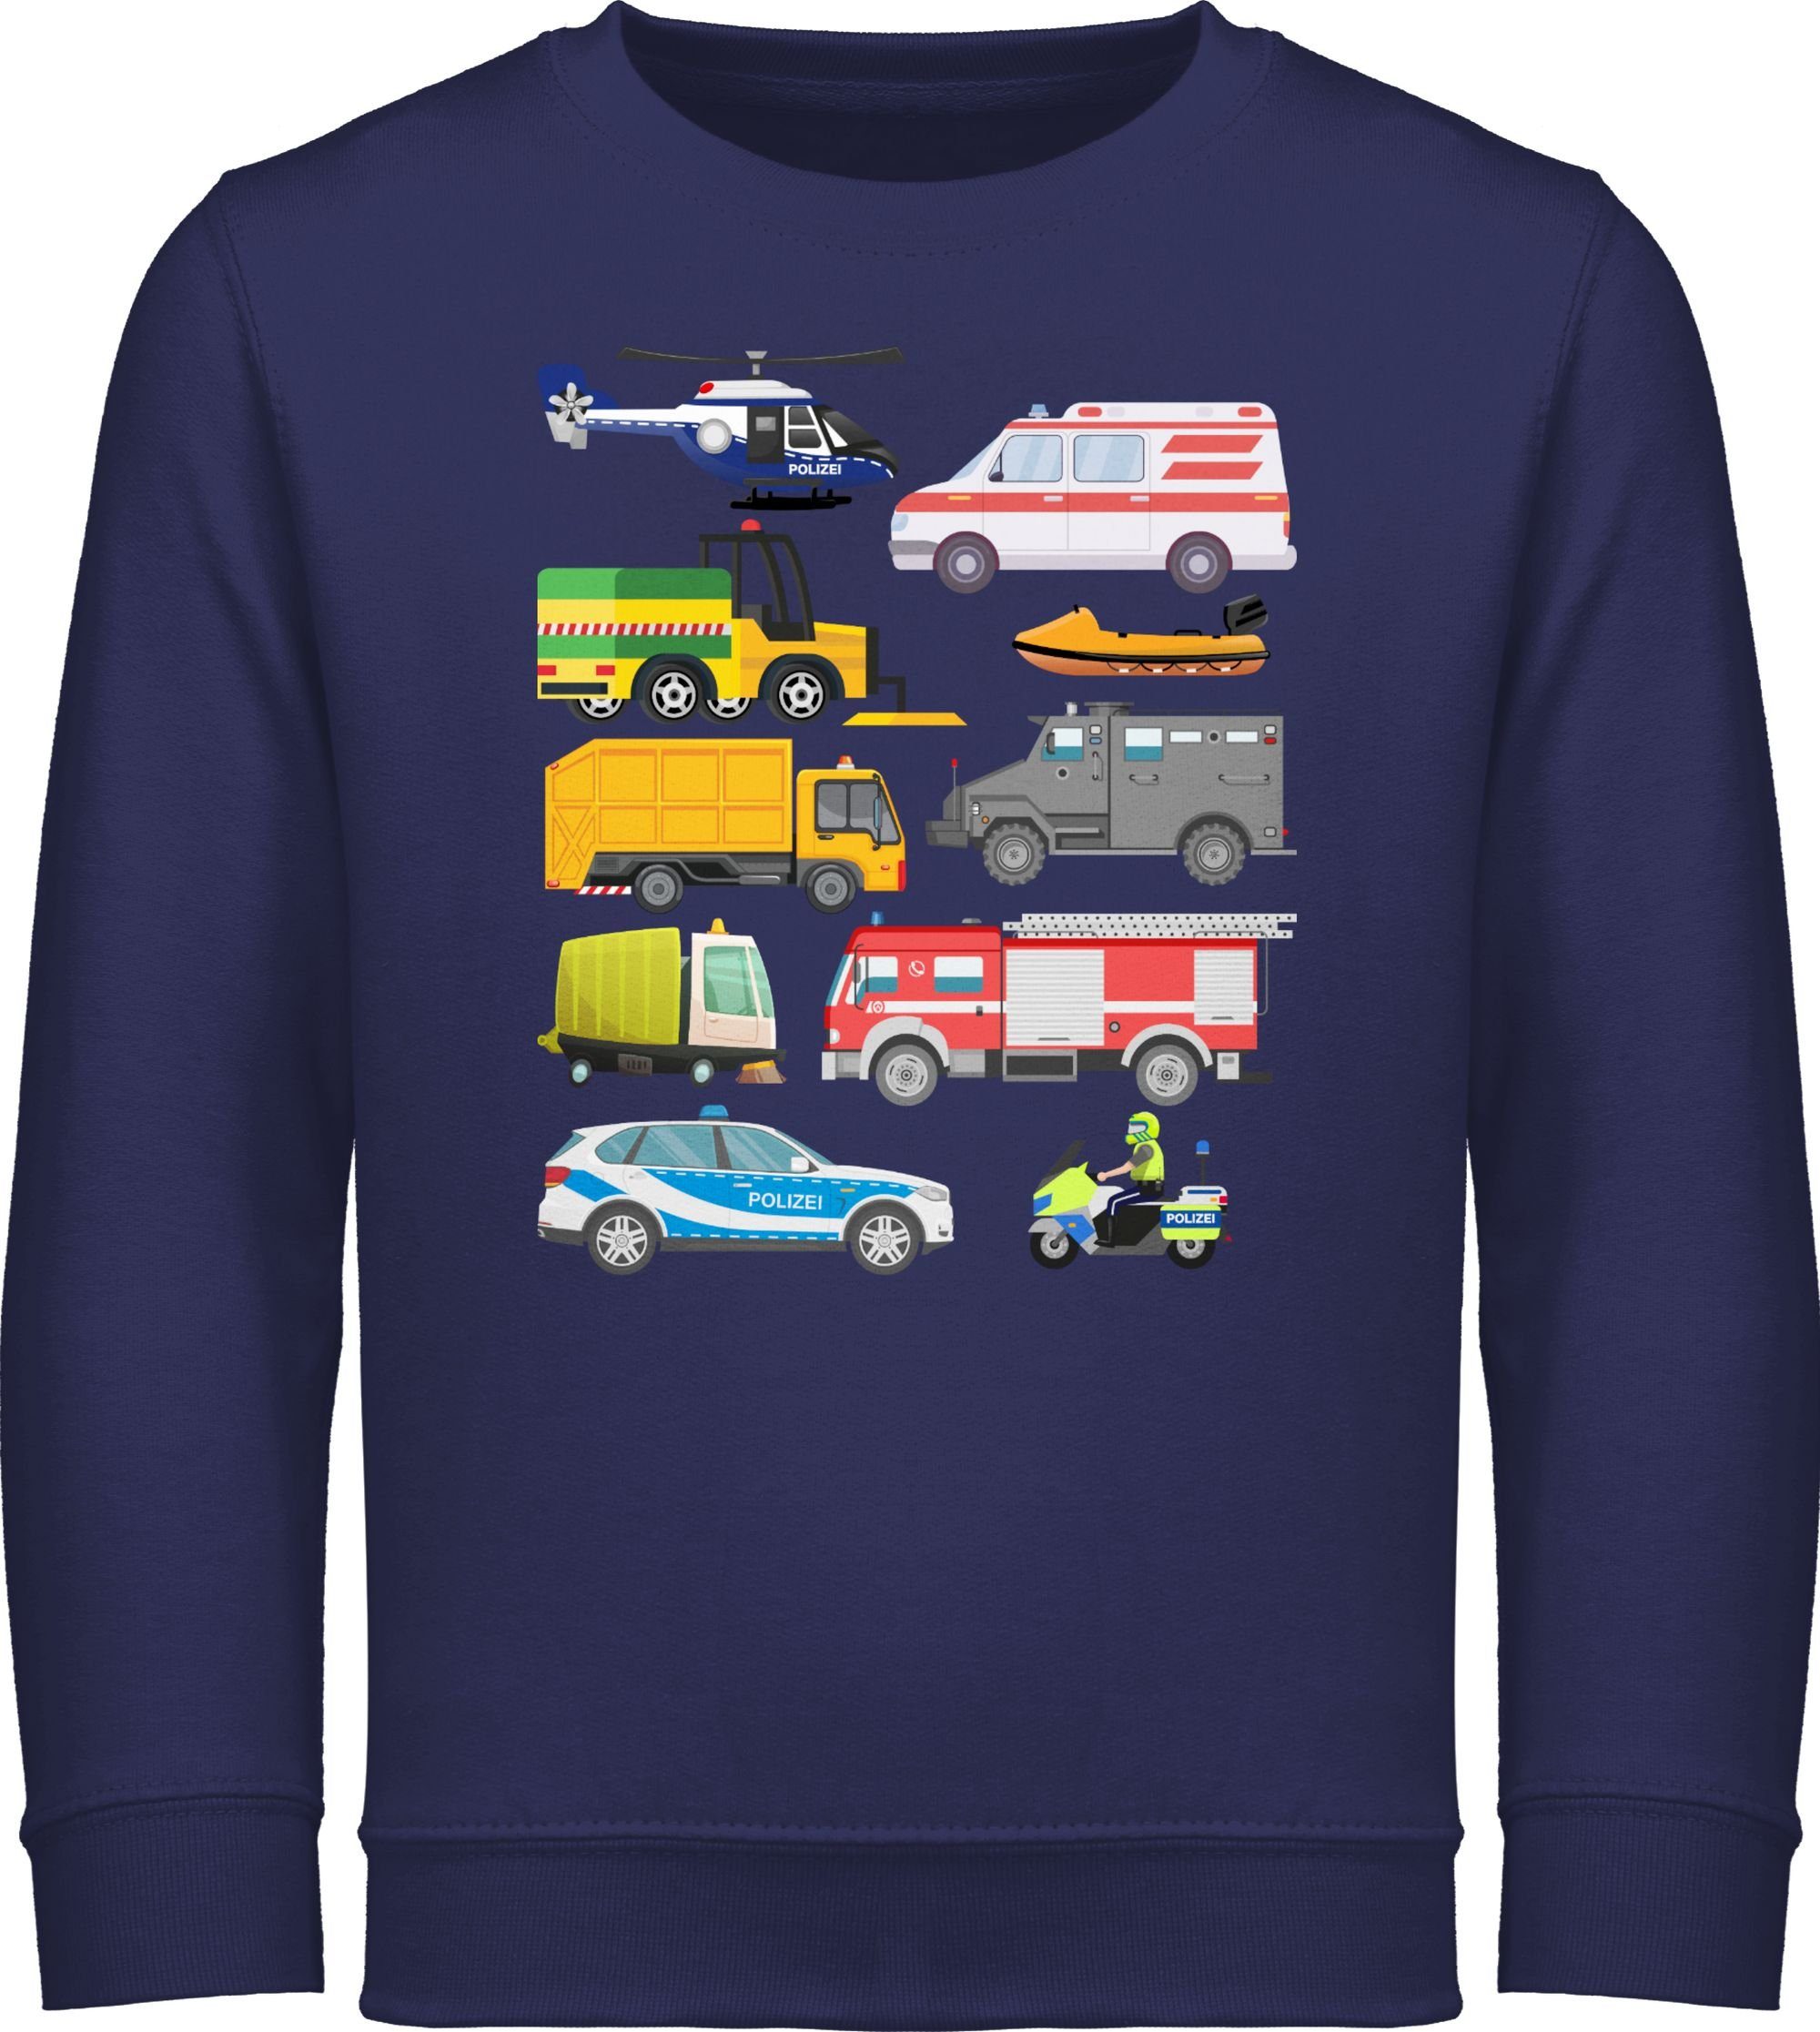 Shirtracer Sweatshirt Fahrzeuge mit Sirene Kinder Fahrzeuge 1 Navy Blau